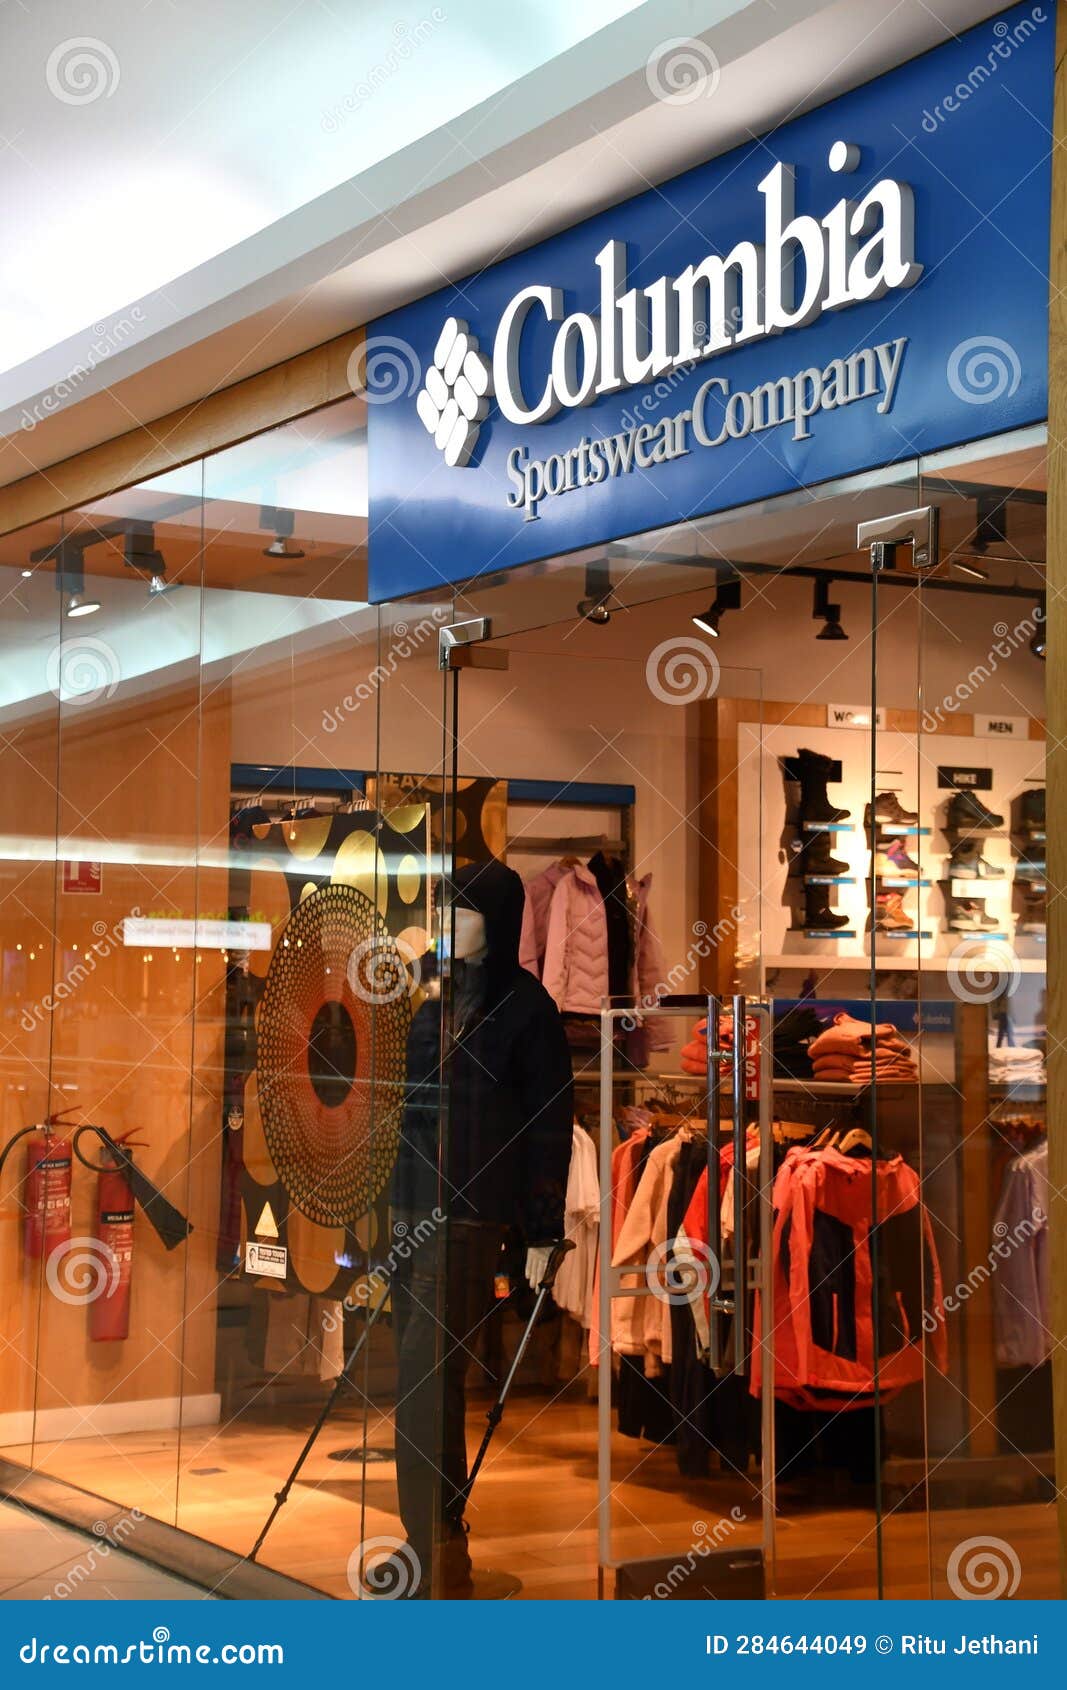 Columbia Sportswear Company at City Center Doha in Qatar Editorial